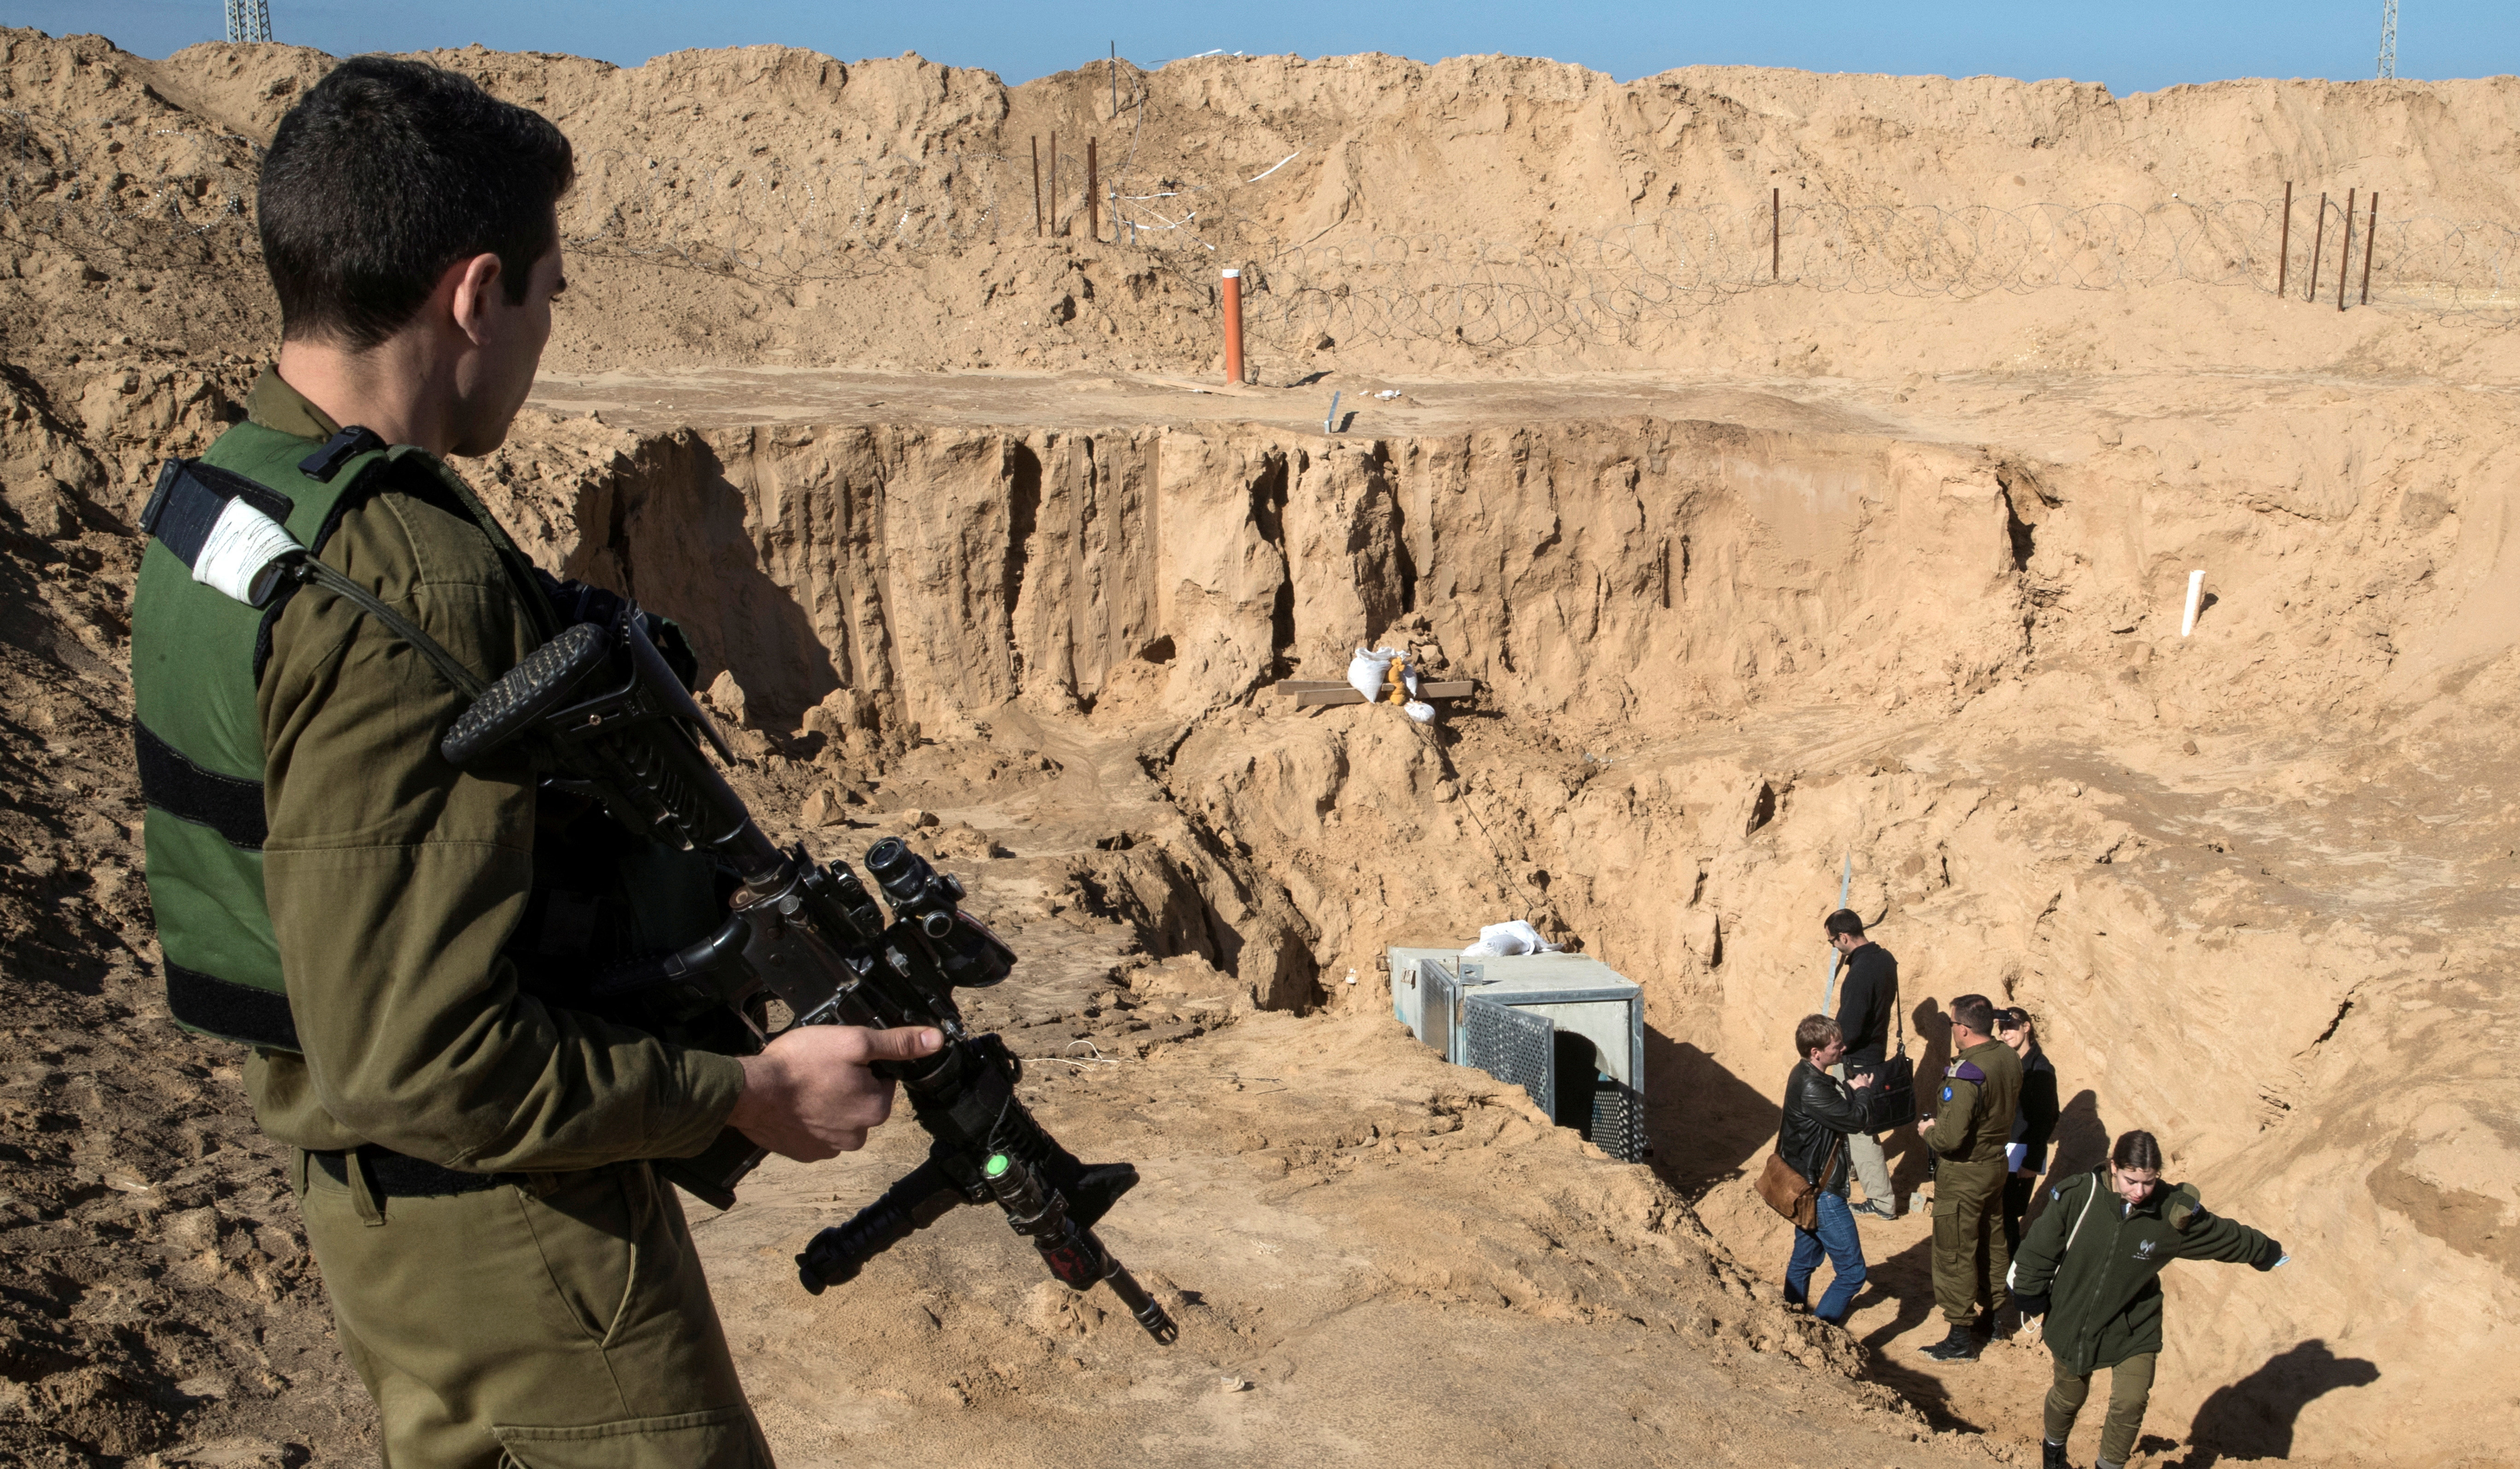 Israeli forces engaged in 'fierce' battles in Gaza, military spokesman says